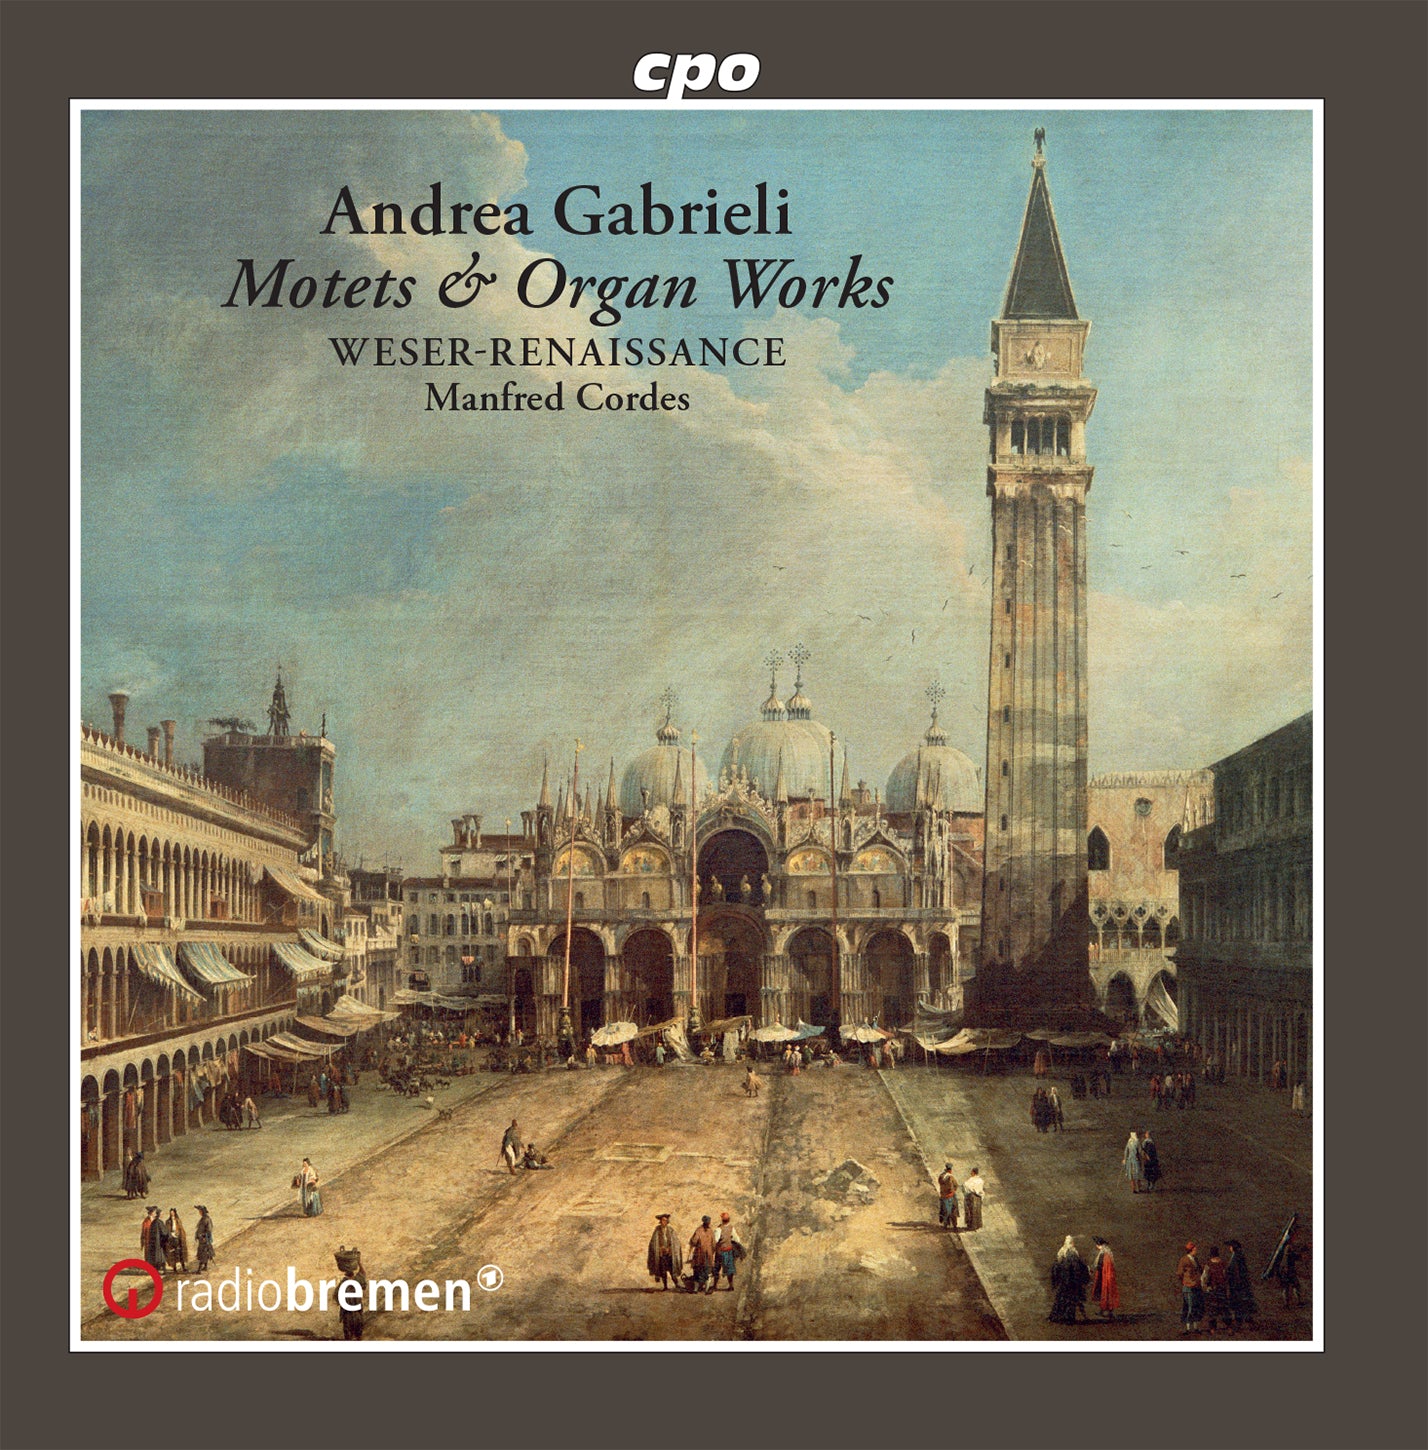 A. Gabrieli: Motets & Organ Works / Weser-Renaissance Bremen